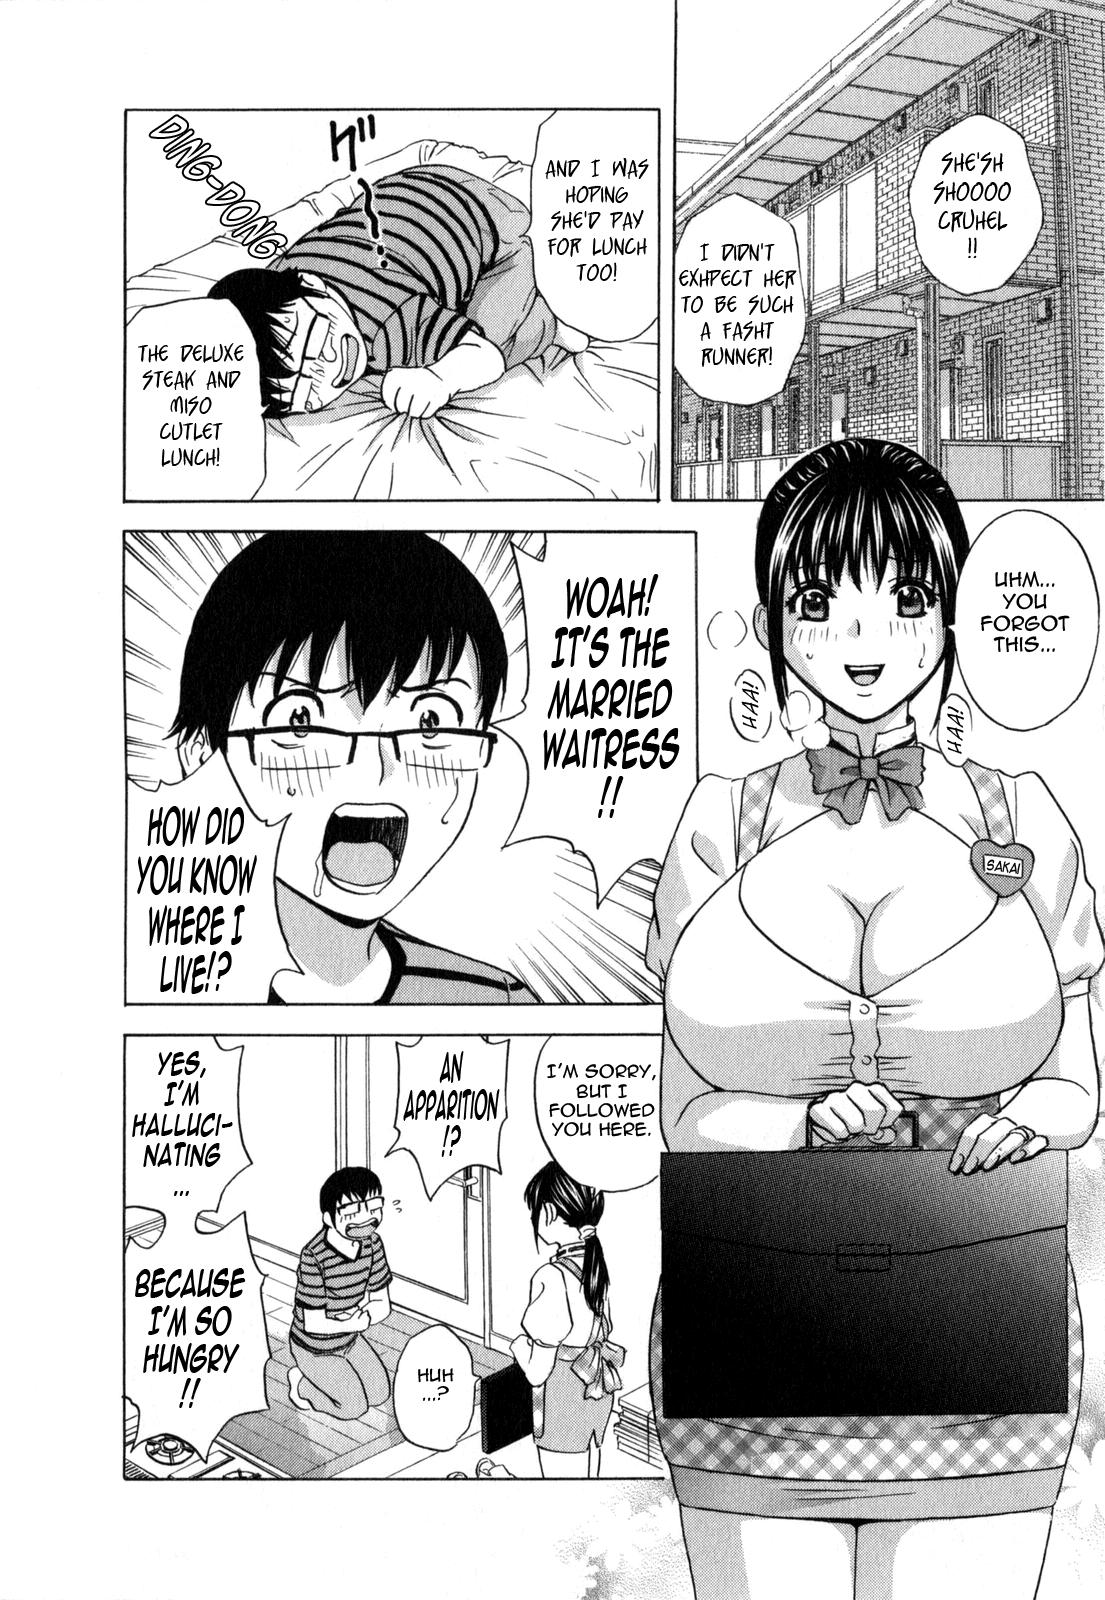 [Hidemaru] Life with Married Women Just Like a Manga 2 - Ch. 1-8 [English] {Tadanohito} 112